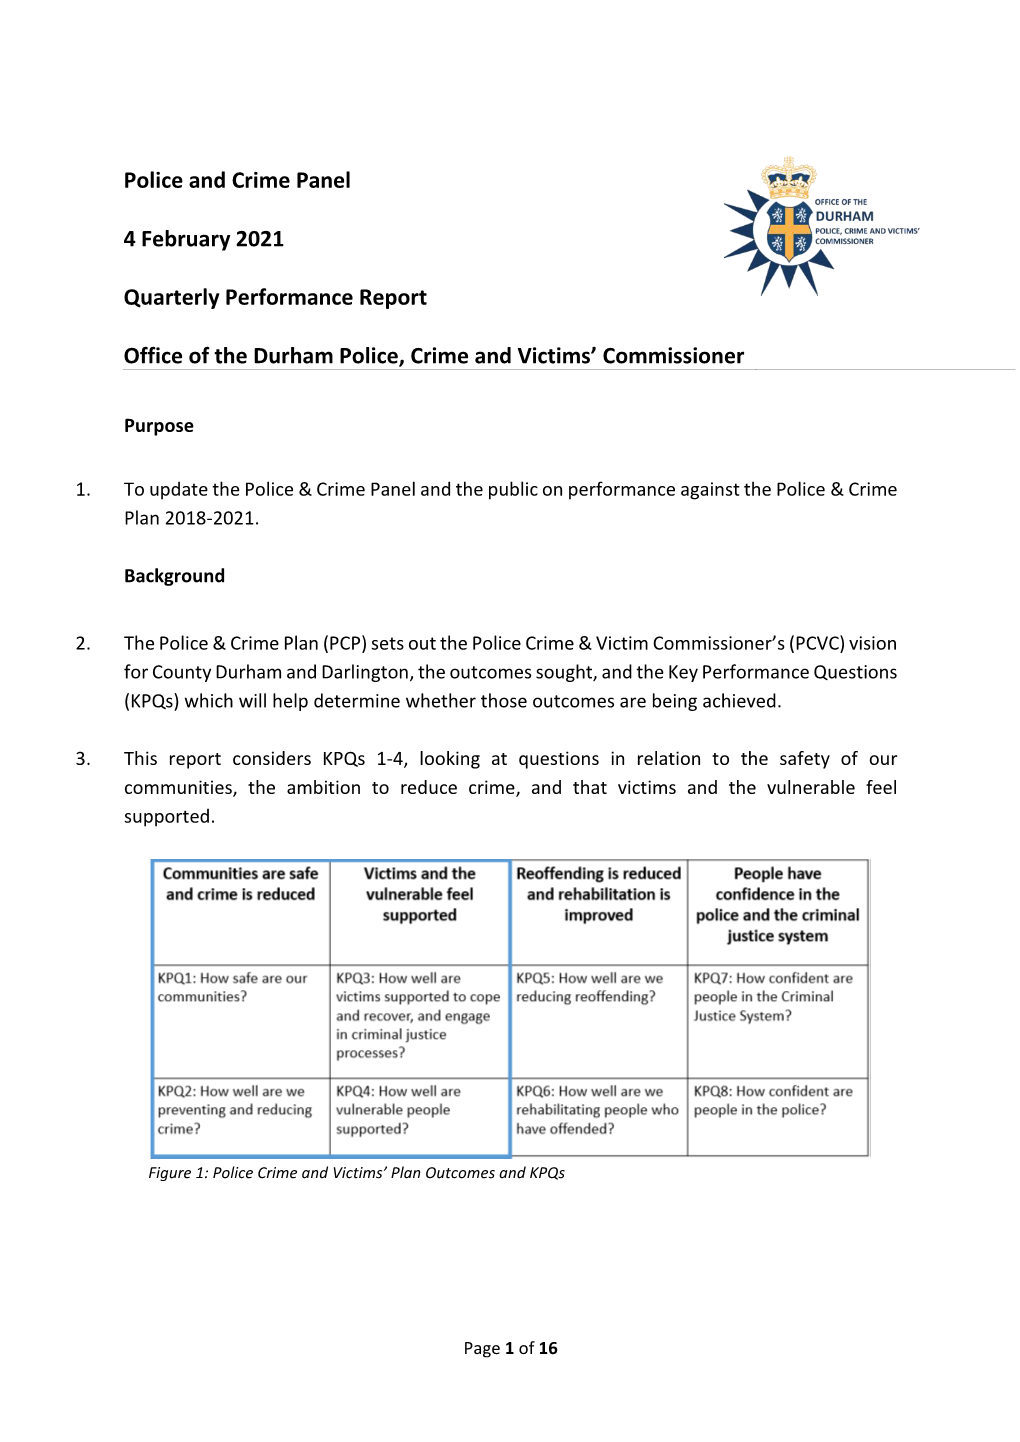 Quarterly Performance Report PDF 995 KB